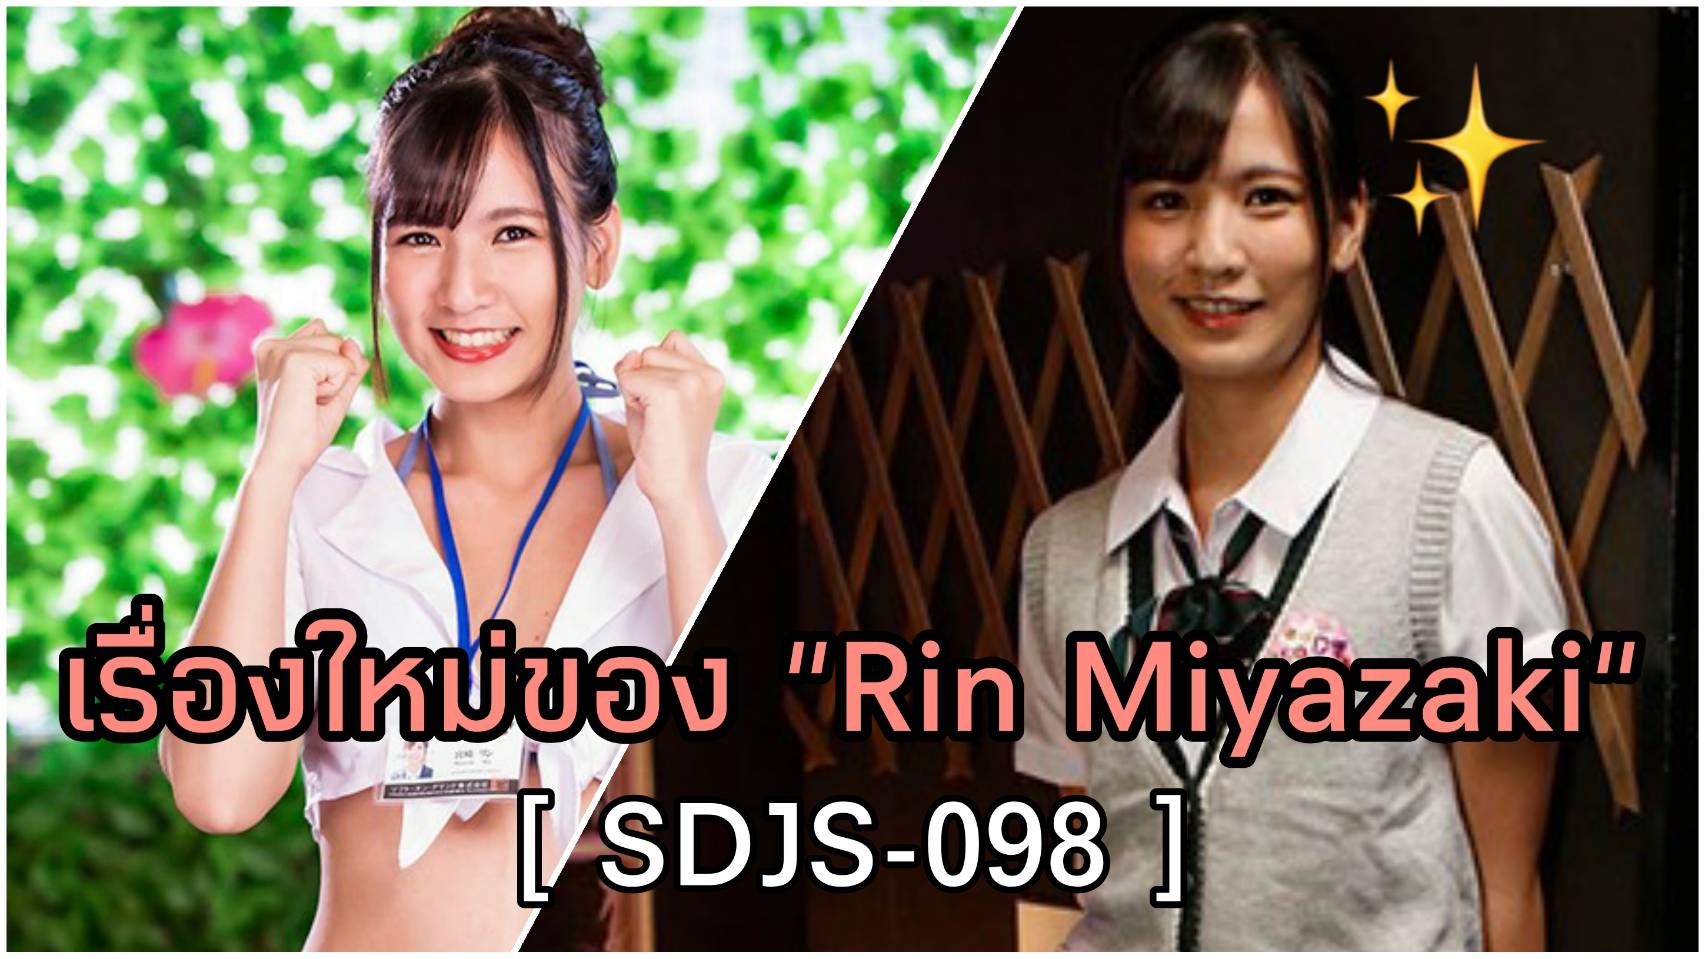 SDJS-098 Rin Miyazaki (ริน มิยาซากิ) หนัง AV เรื่องใหม่ 4